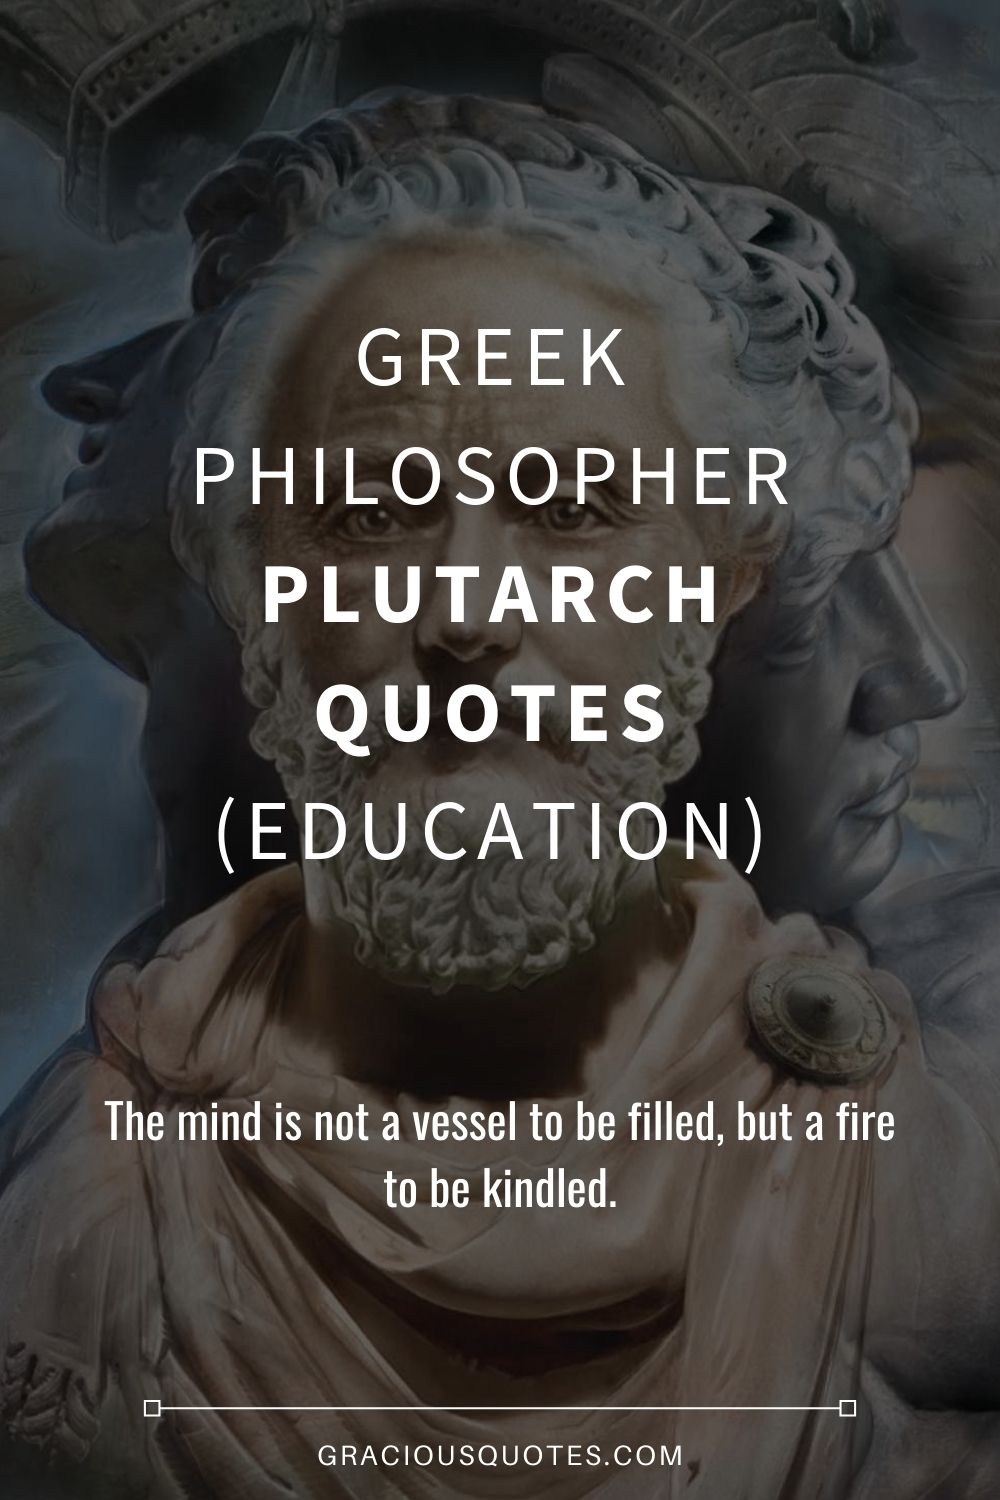 Greek Philosopher Plutarch Quotes (EDUCATION) - Gracious Quotes